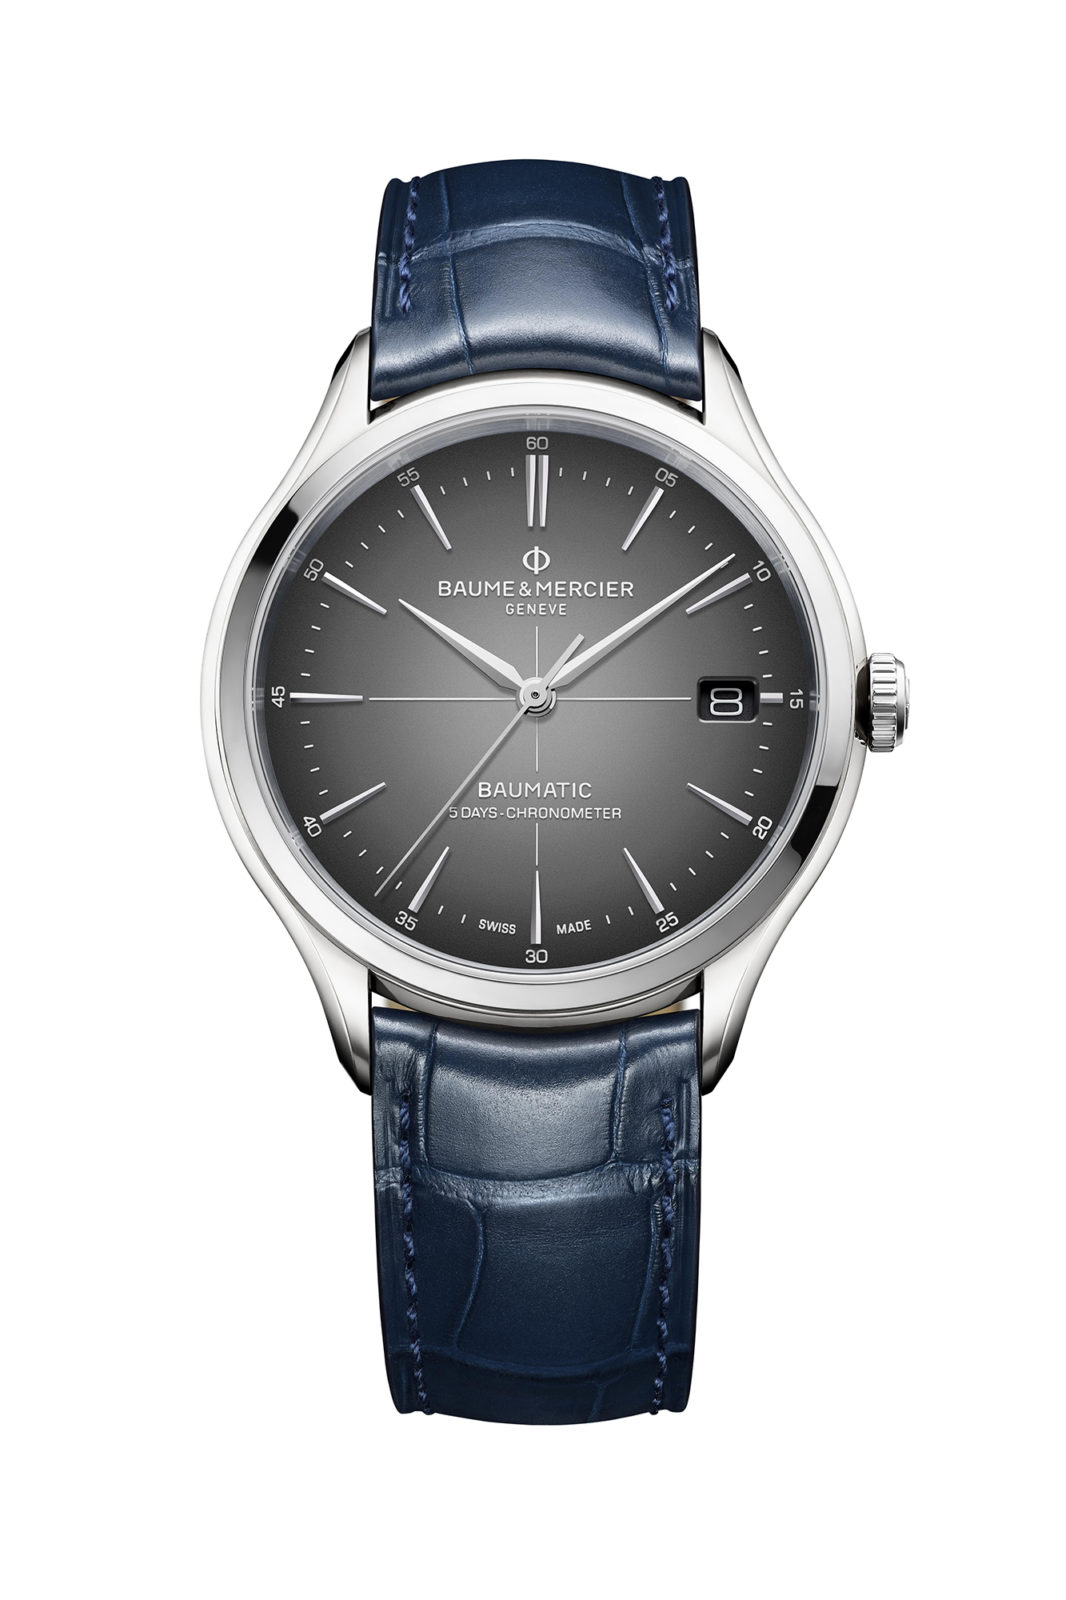 Baume & Mercier Watches & Wonders 2020 - Baumatic Cosc